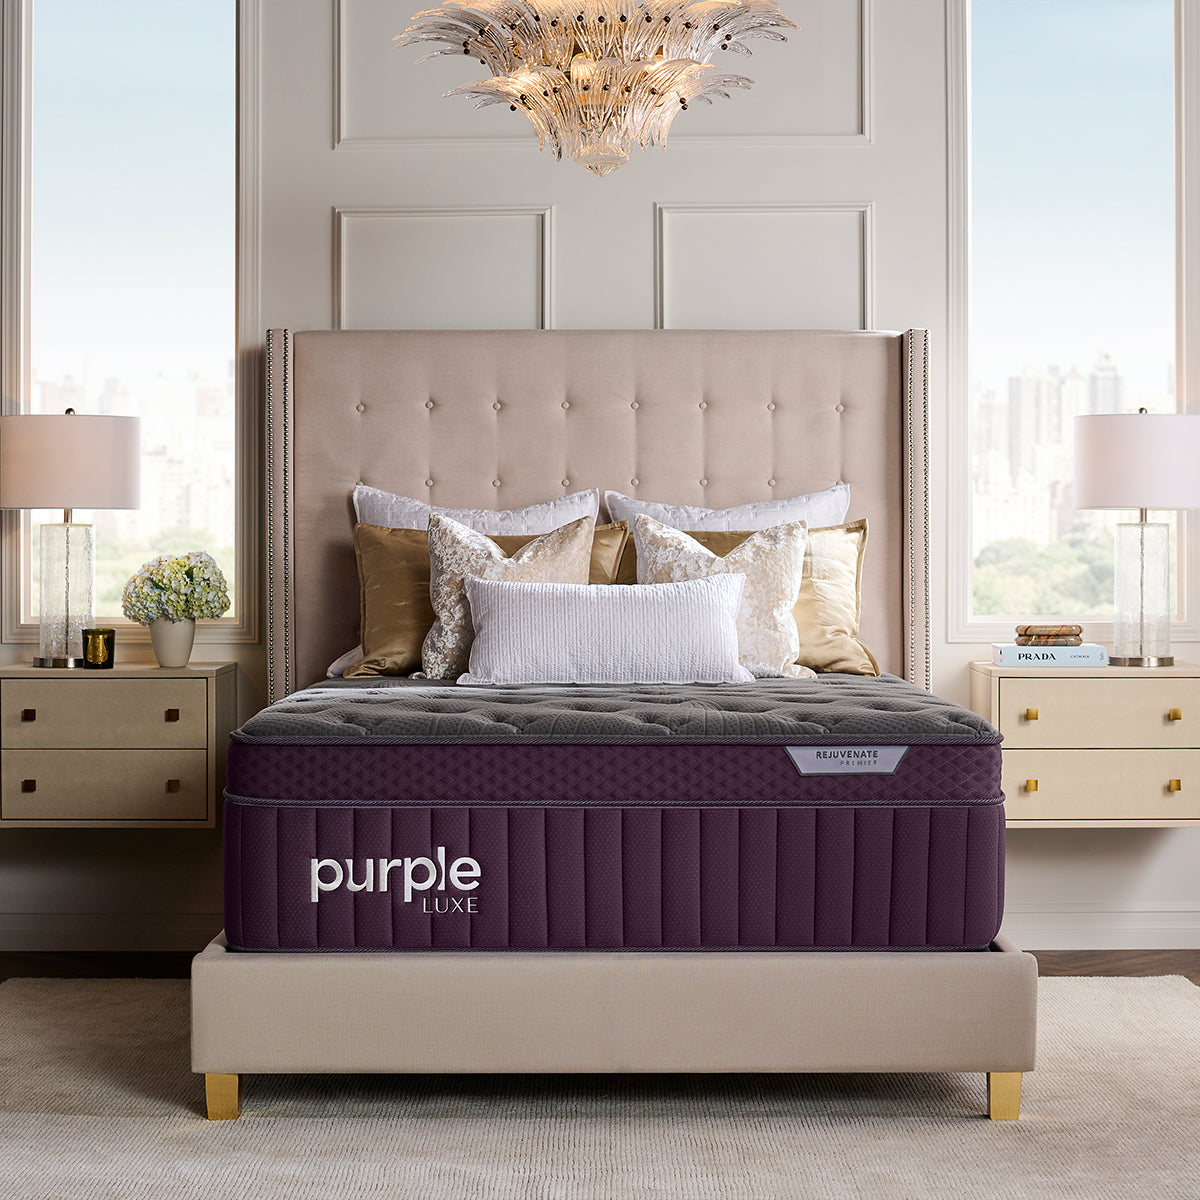 Purple Rejuvenate Premier Mattress In Bedroom